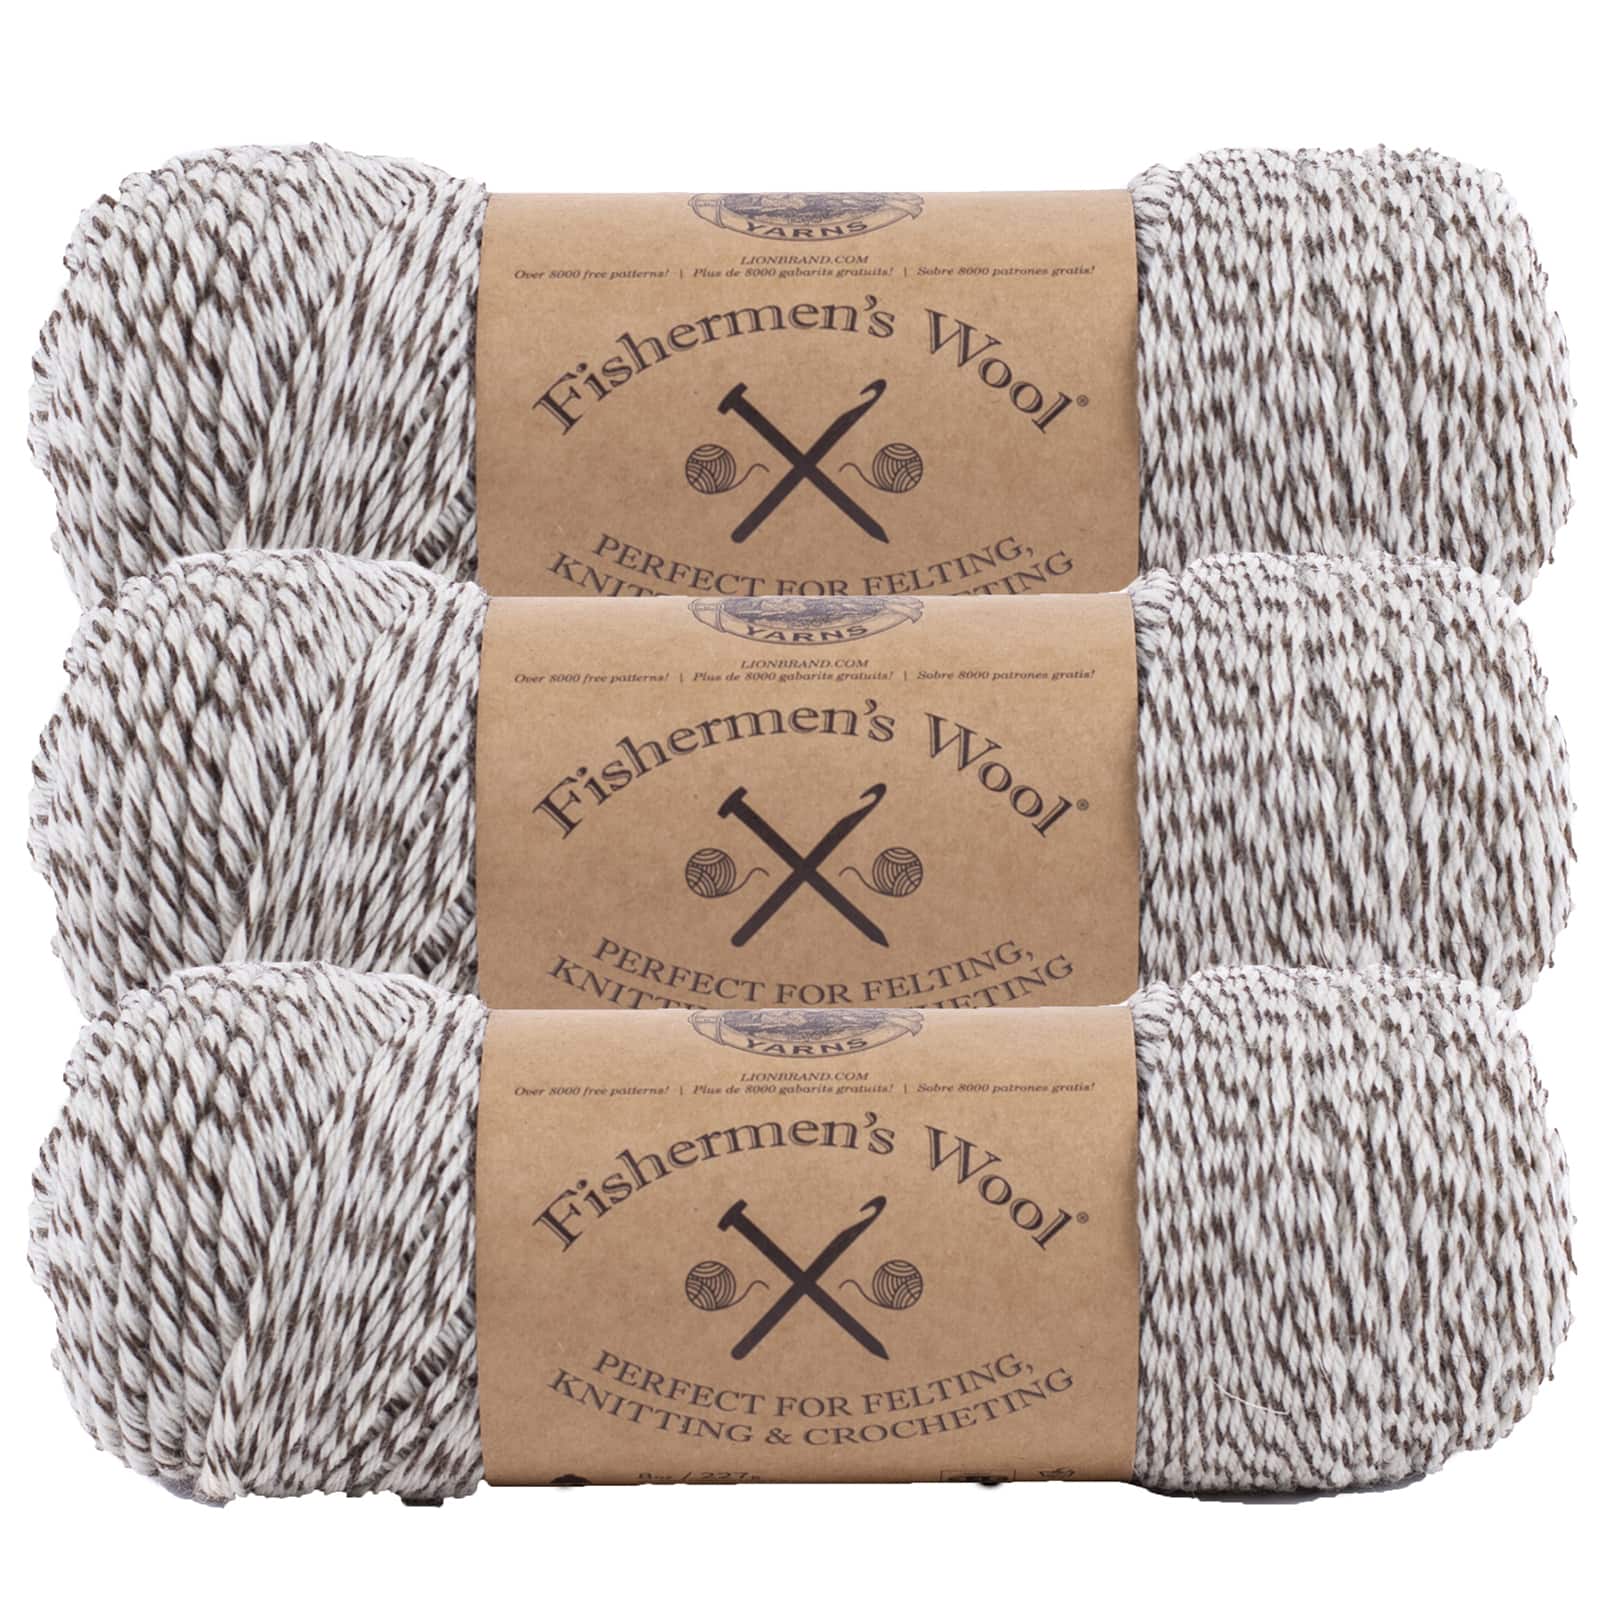 Lion Brand Fisherman's Wool Yarn: Oatmeal 